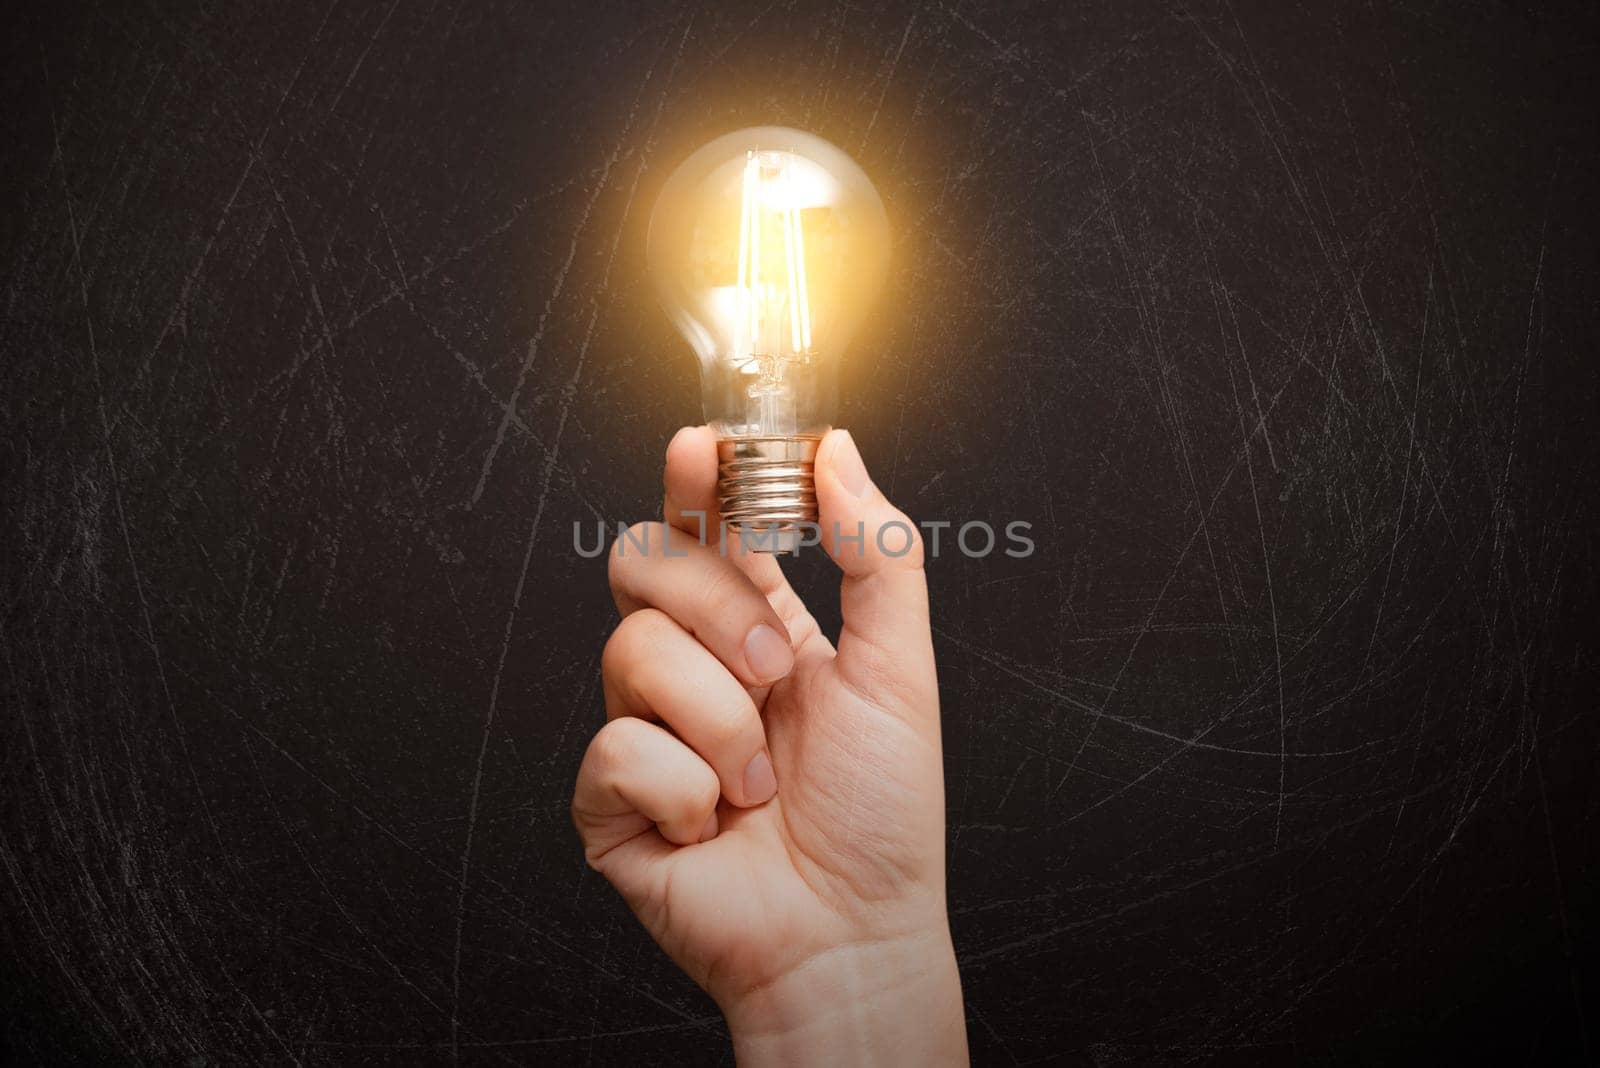 Business, creative idea concept with light bulb by simpson33